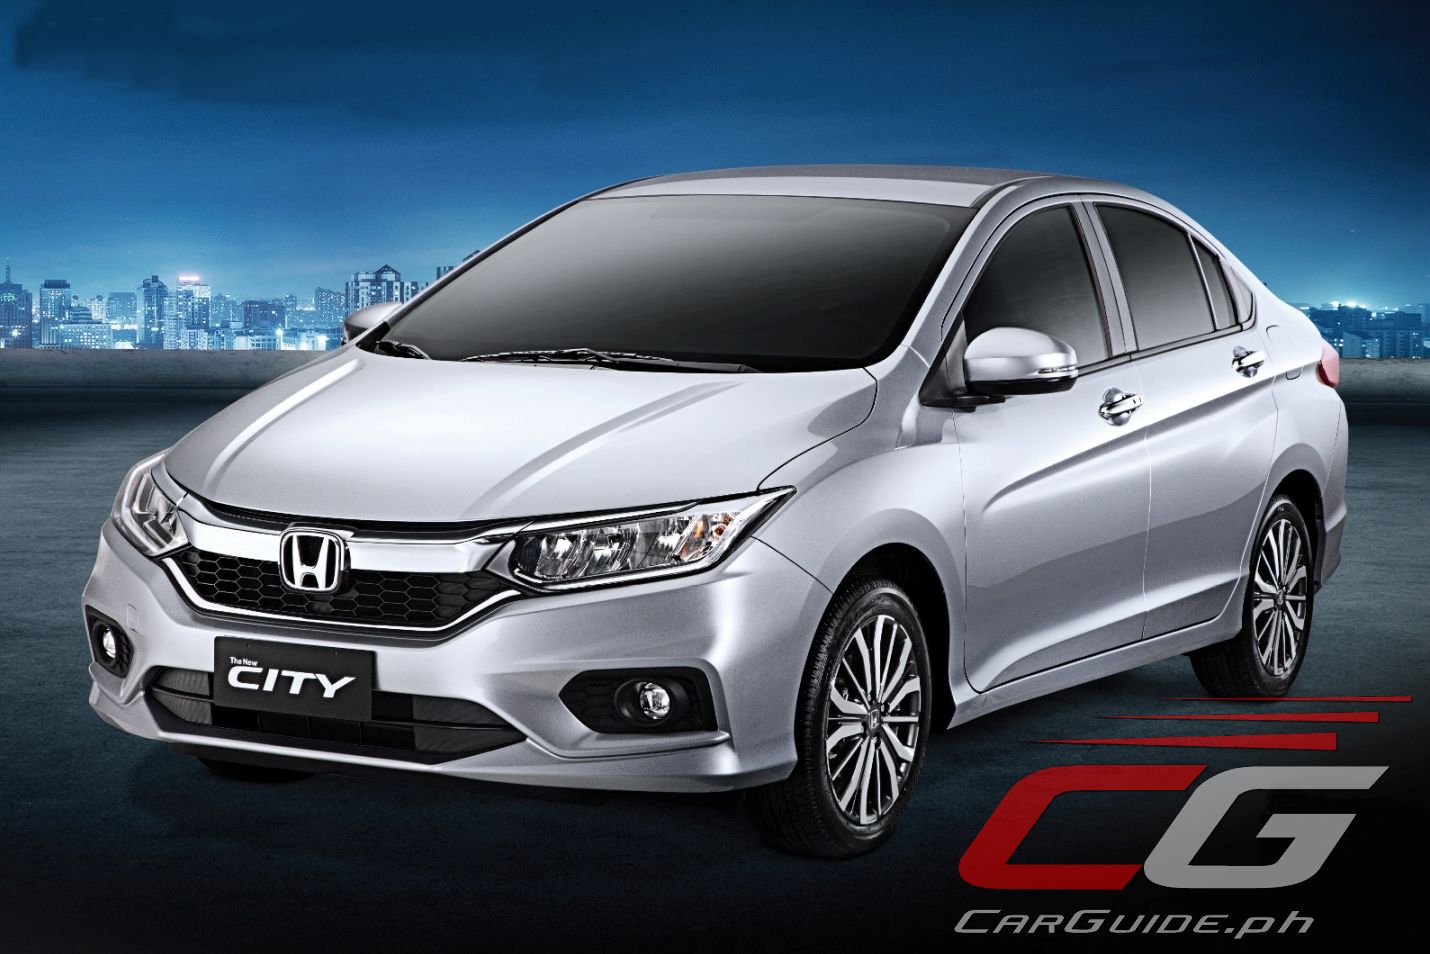 Honda Refreshes City For 17 The Smartest Choice W Specs Carguide Ph Philippine Car News Car Reviews Car Prices